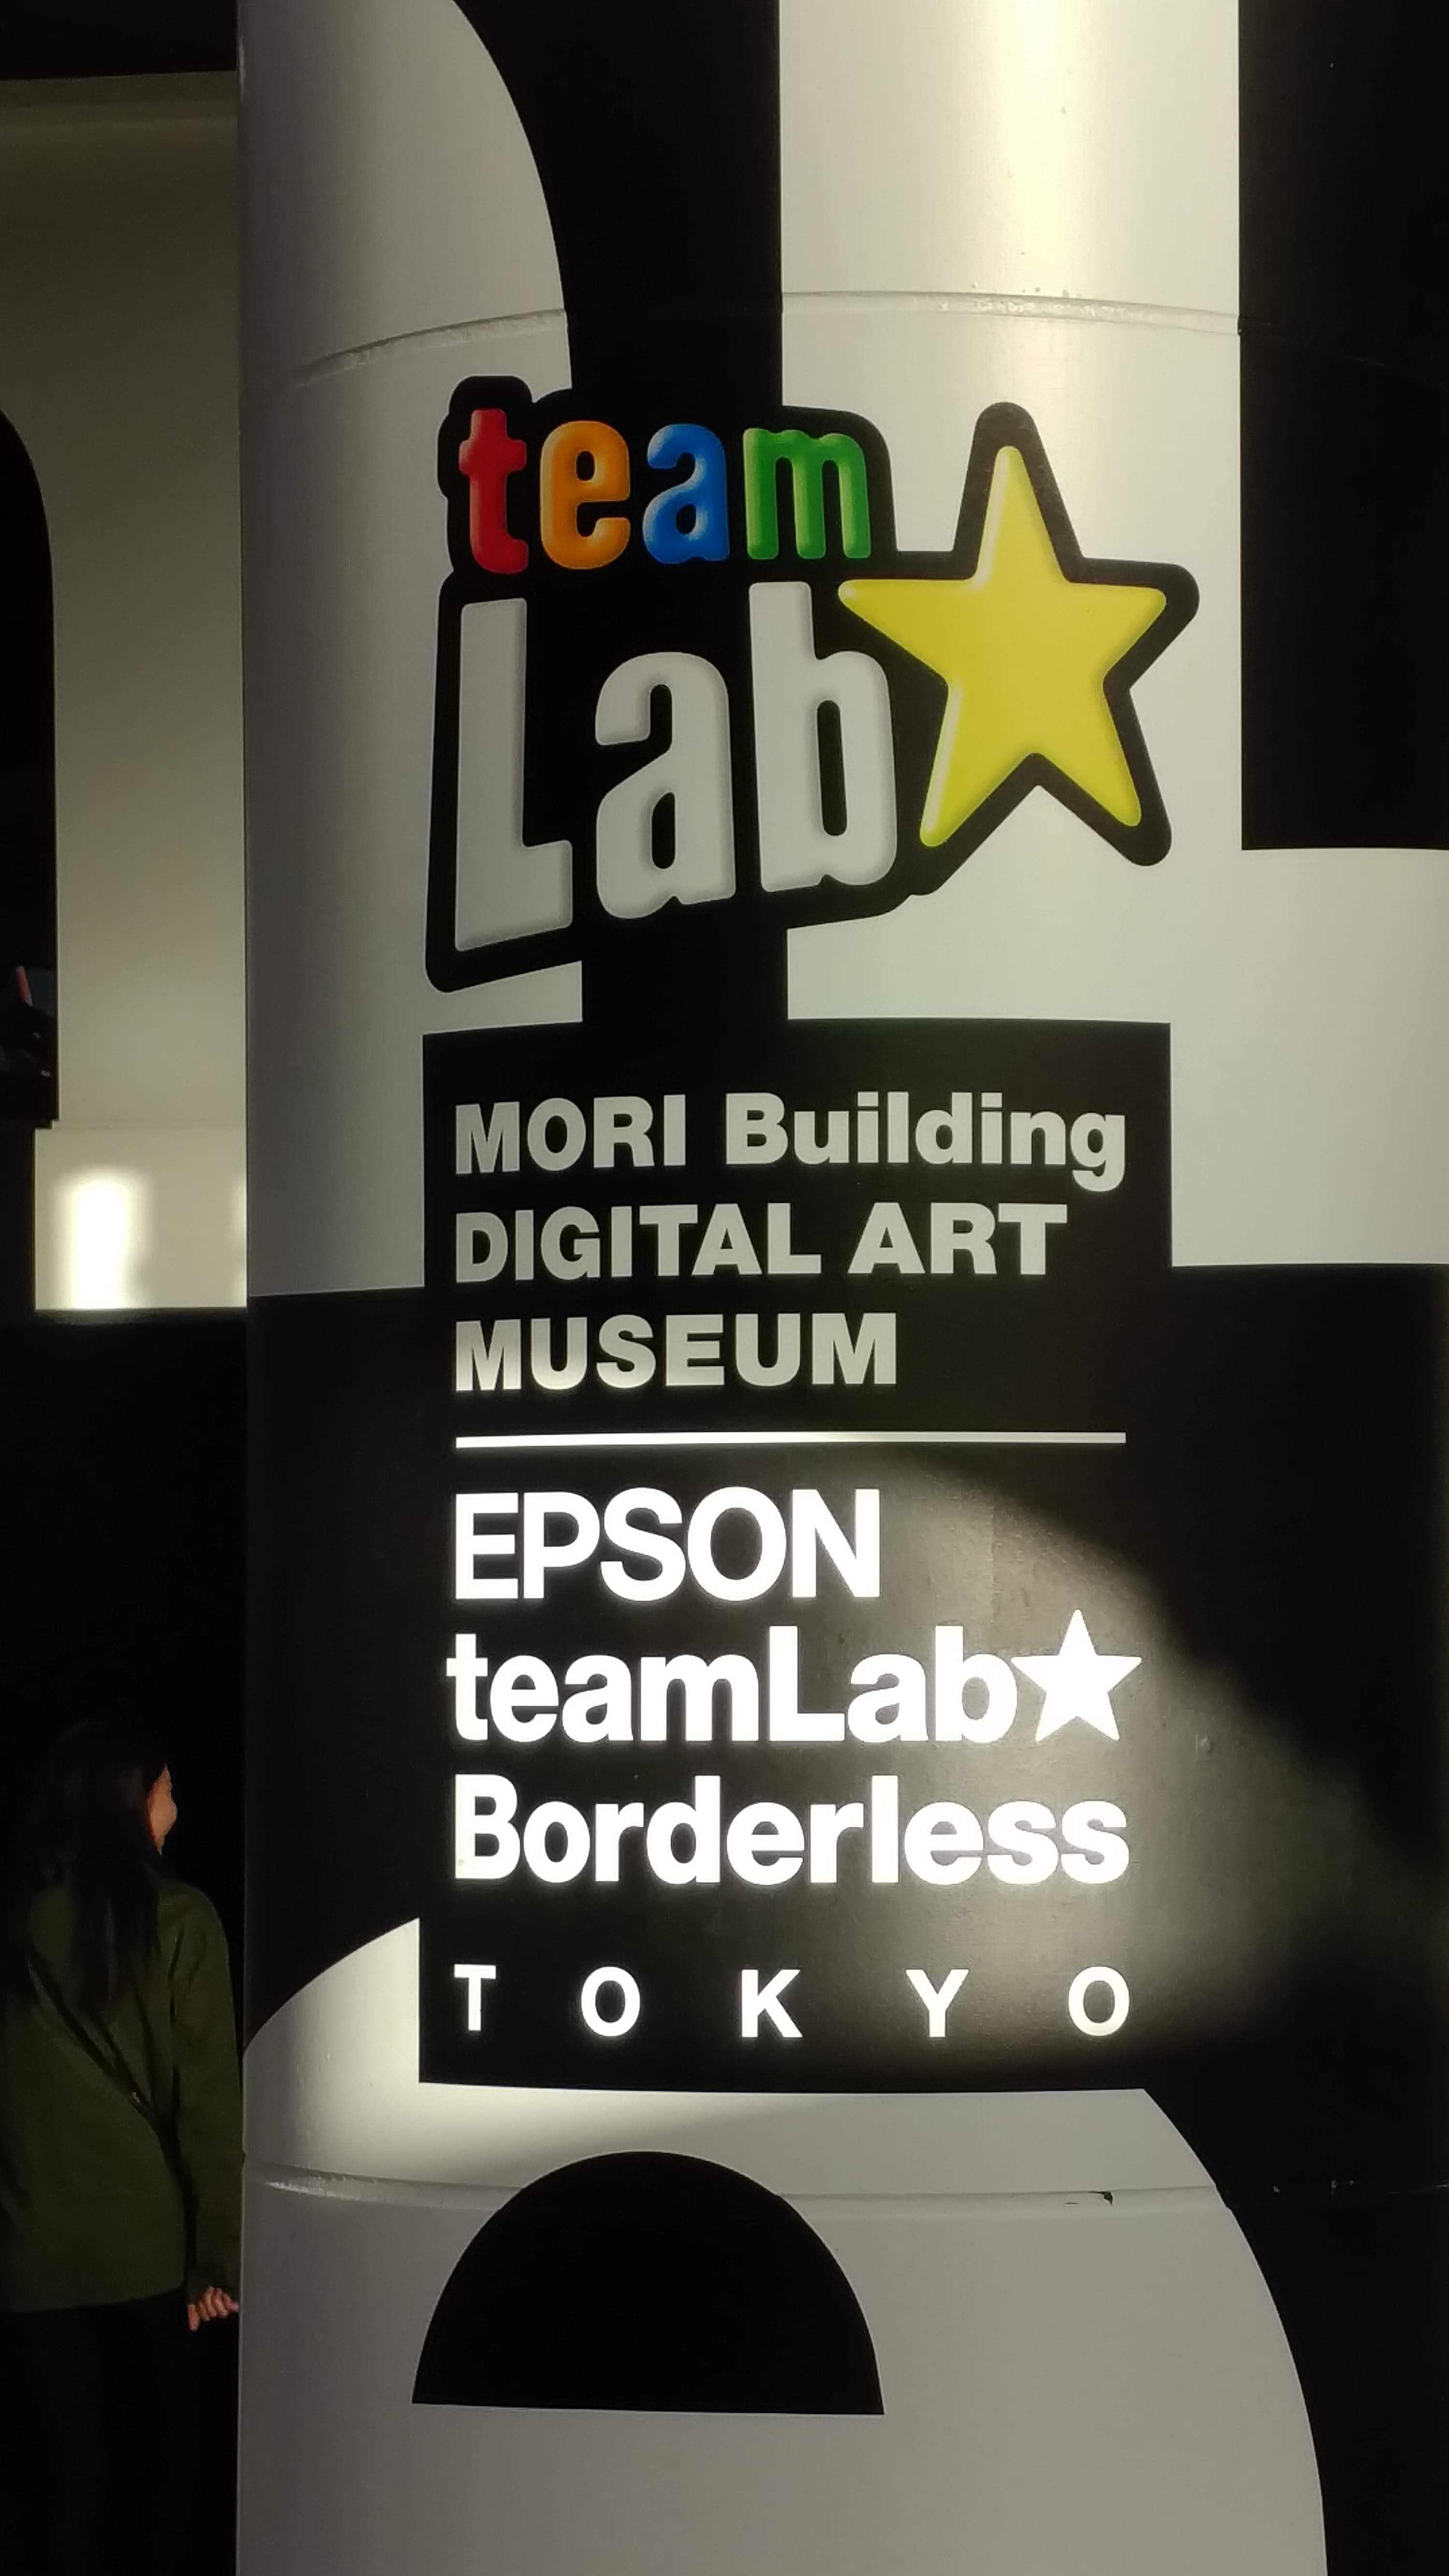 sign with teamlab logo, Mori Building Digital Art Museum, and epson teamlab borderless tokyo